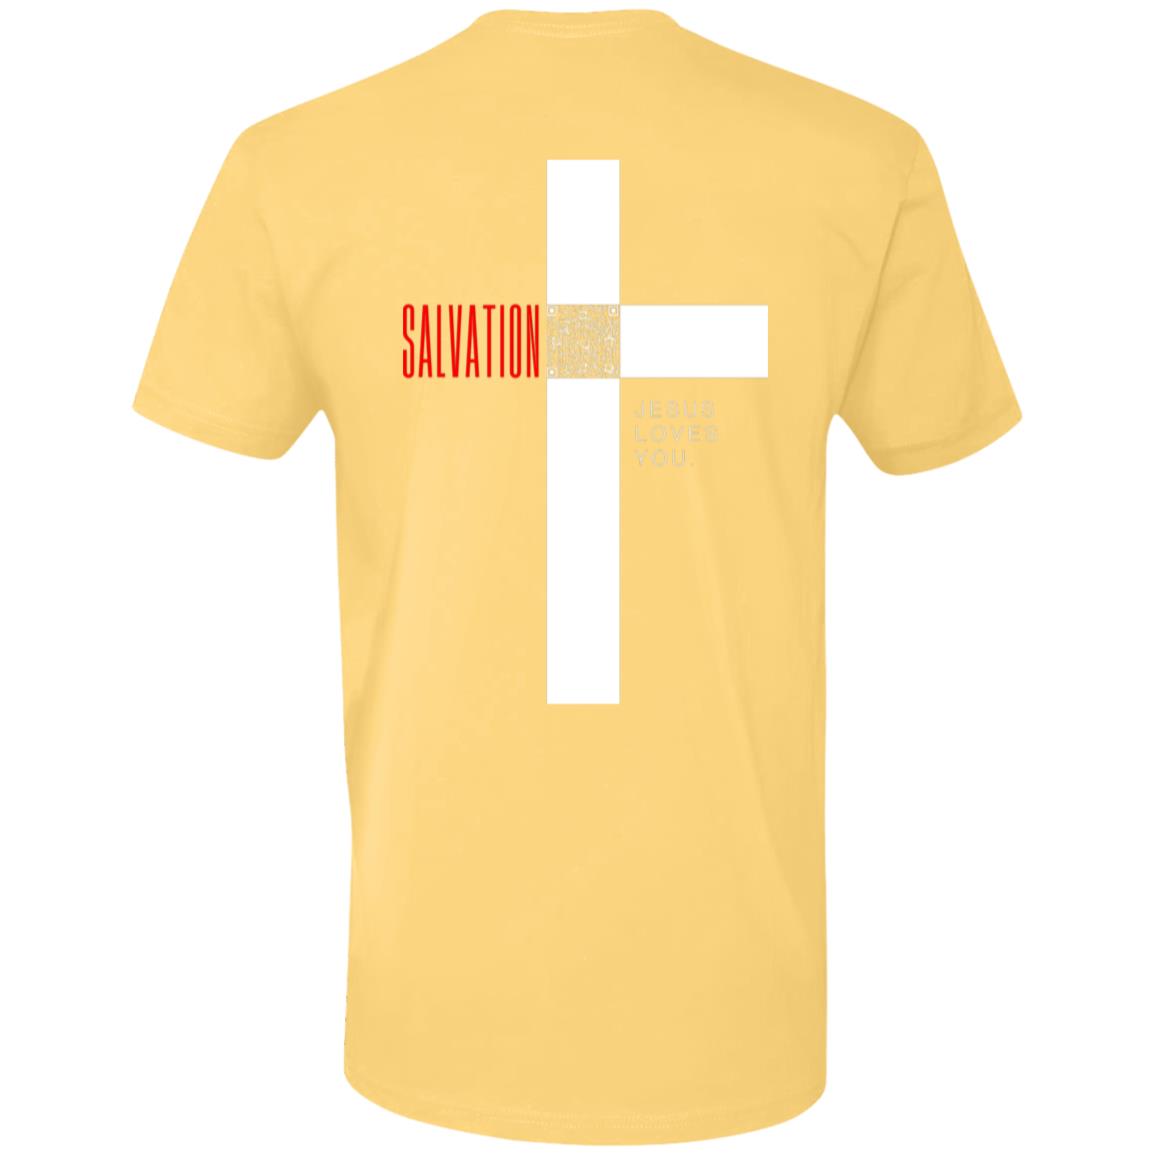 Cross of Salvation Short Sleeve Tee- HopeLinks QrClothes